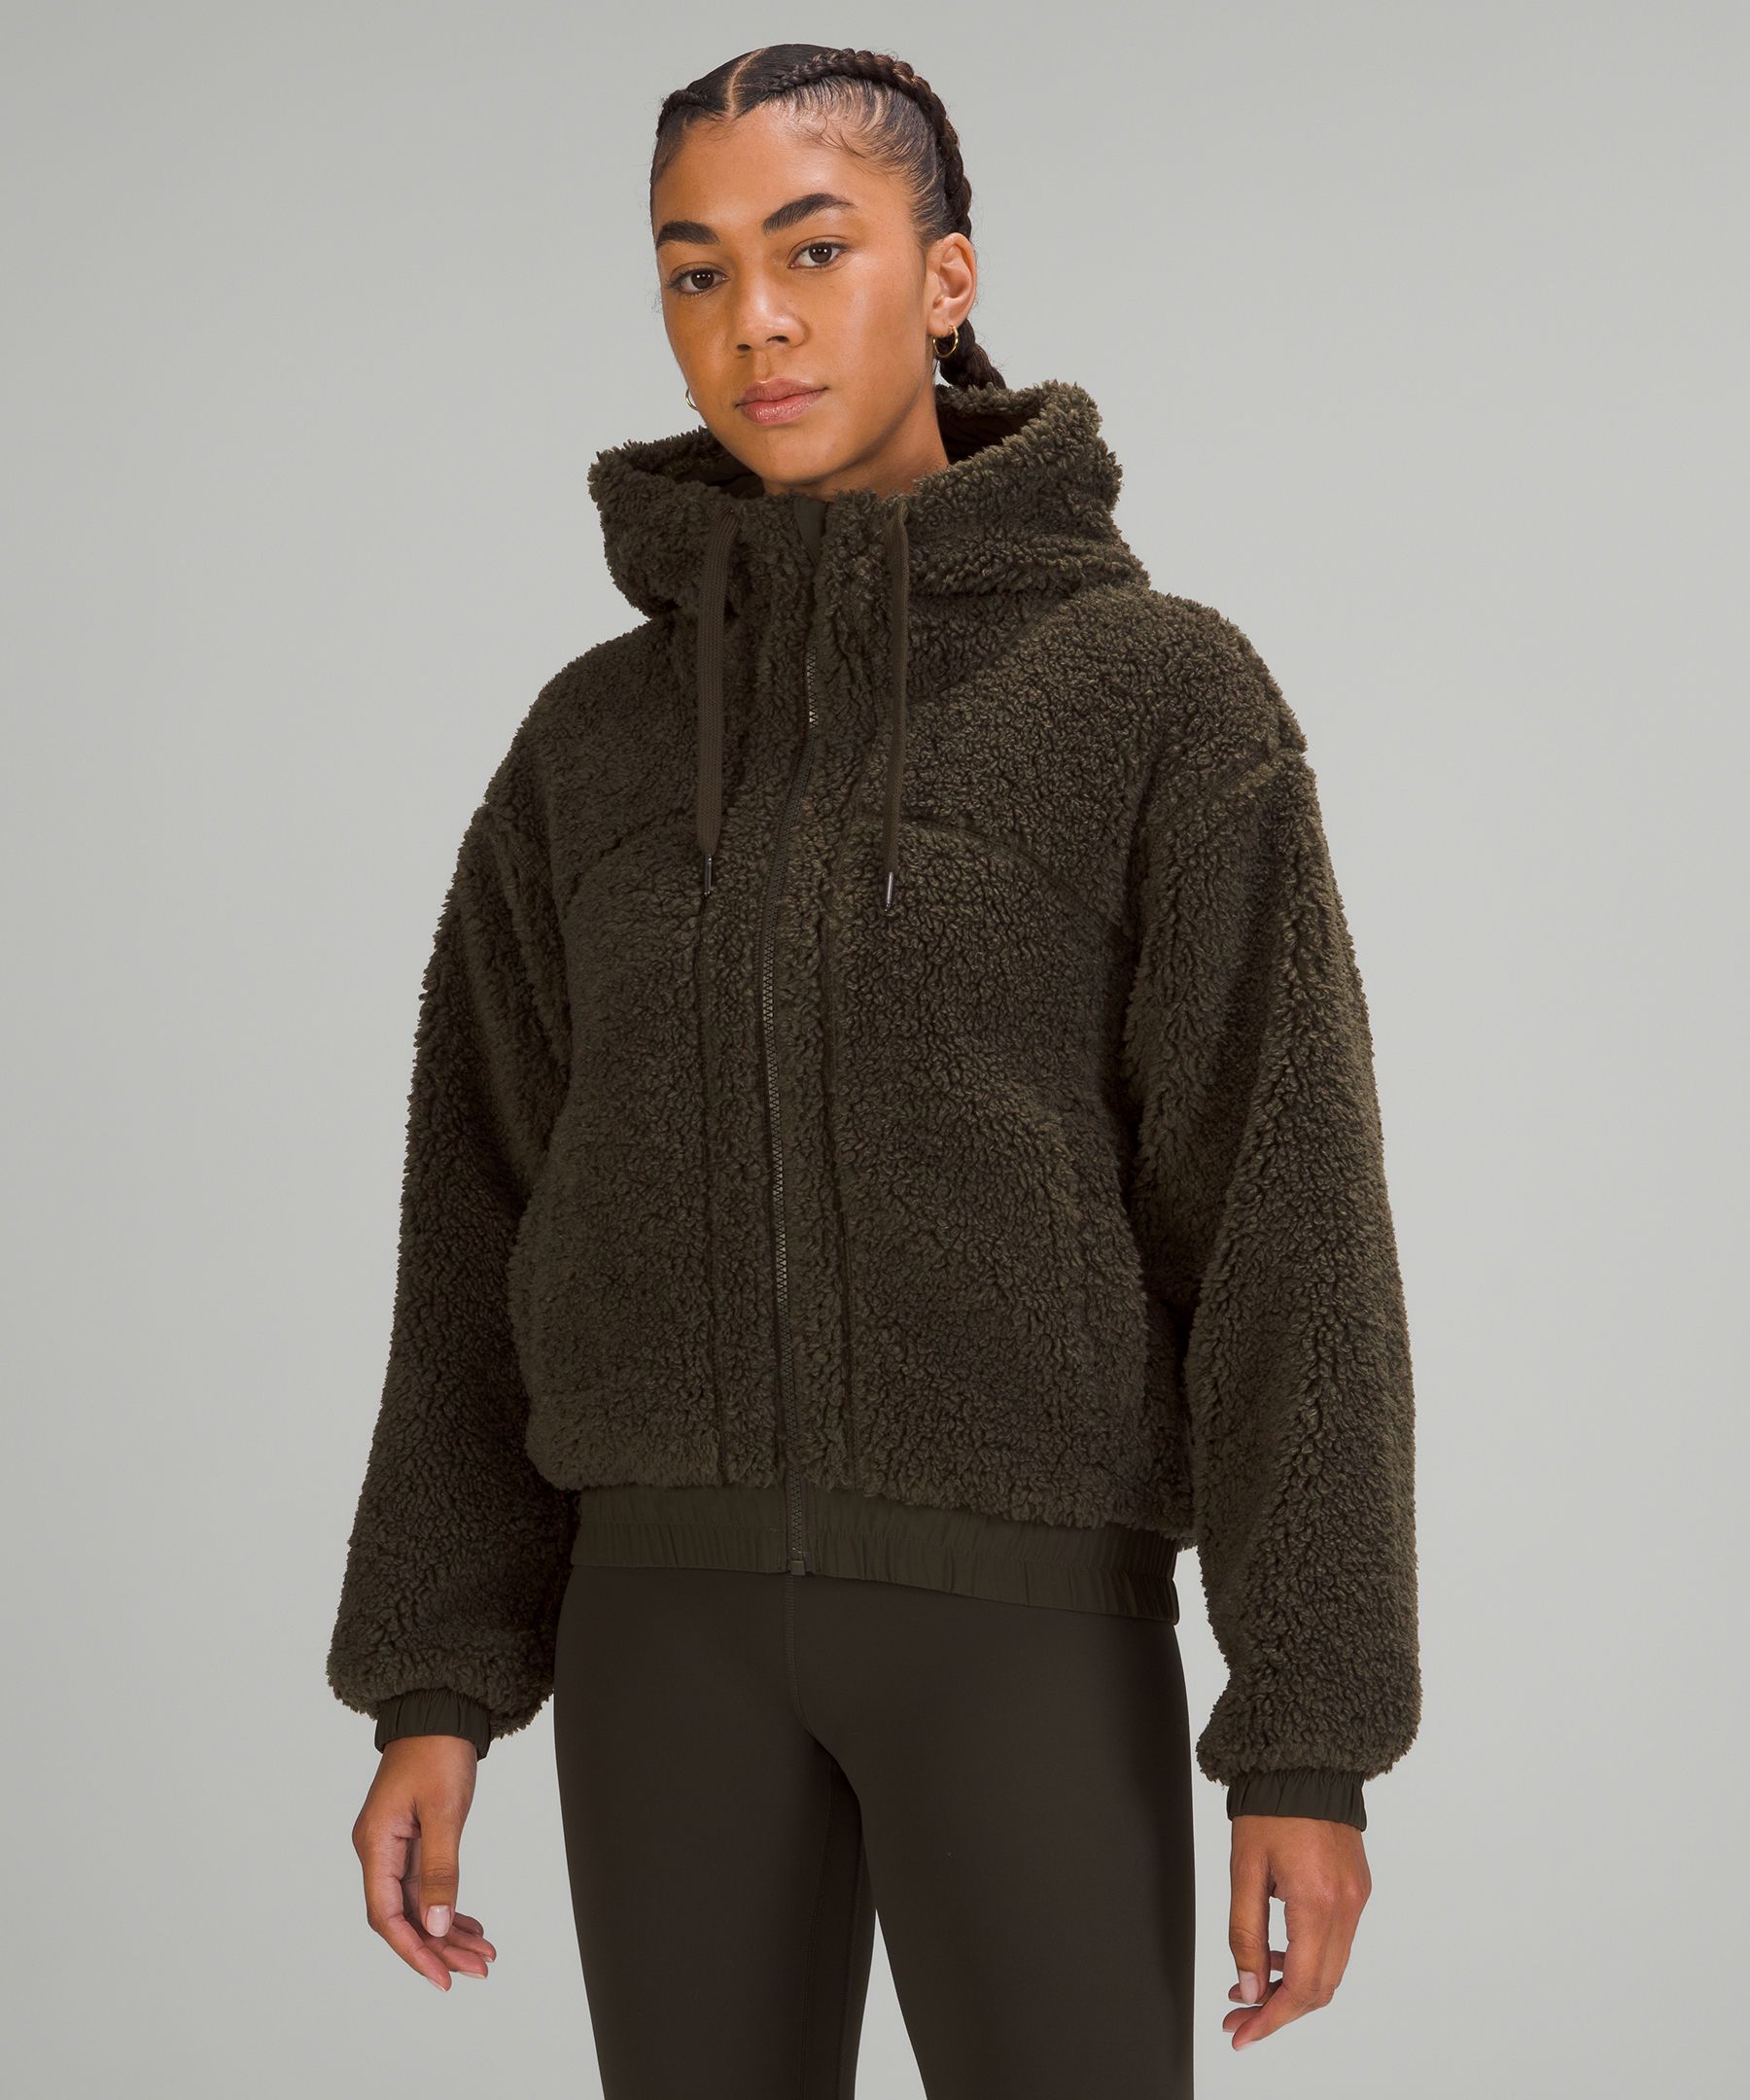 SALE TODAY! Tek Gear Women's Fleece Jacket Reversible Hood Zip Up Size  Small